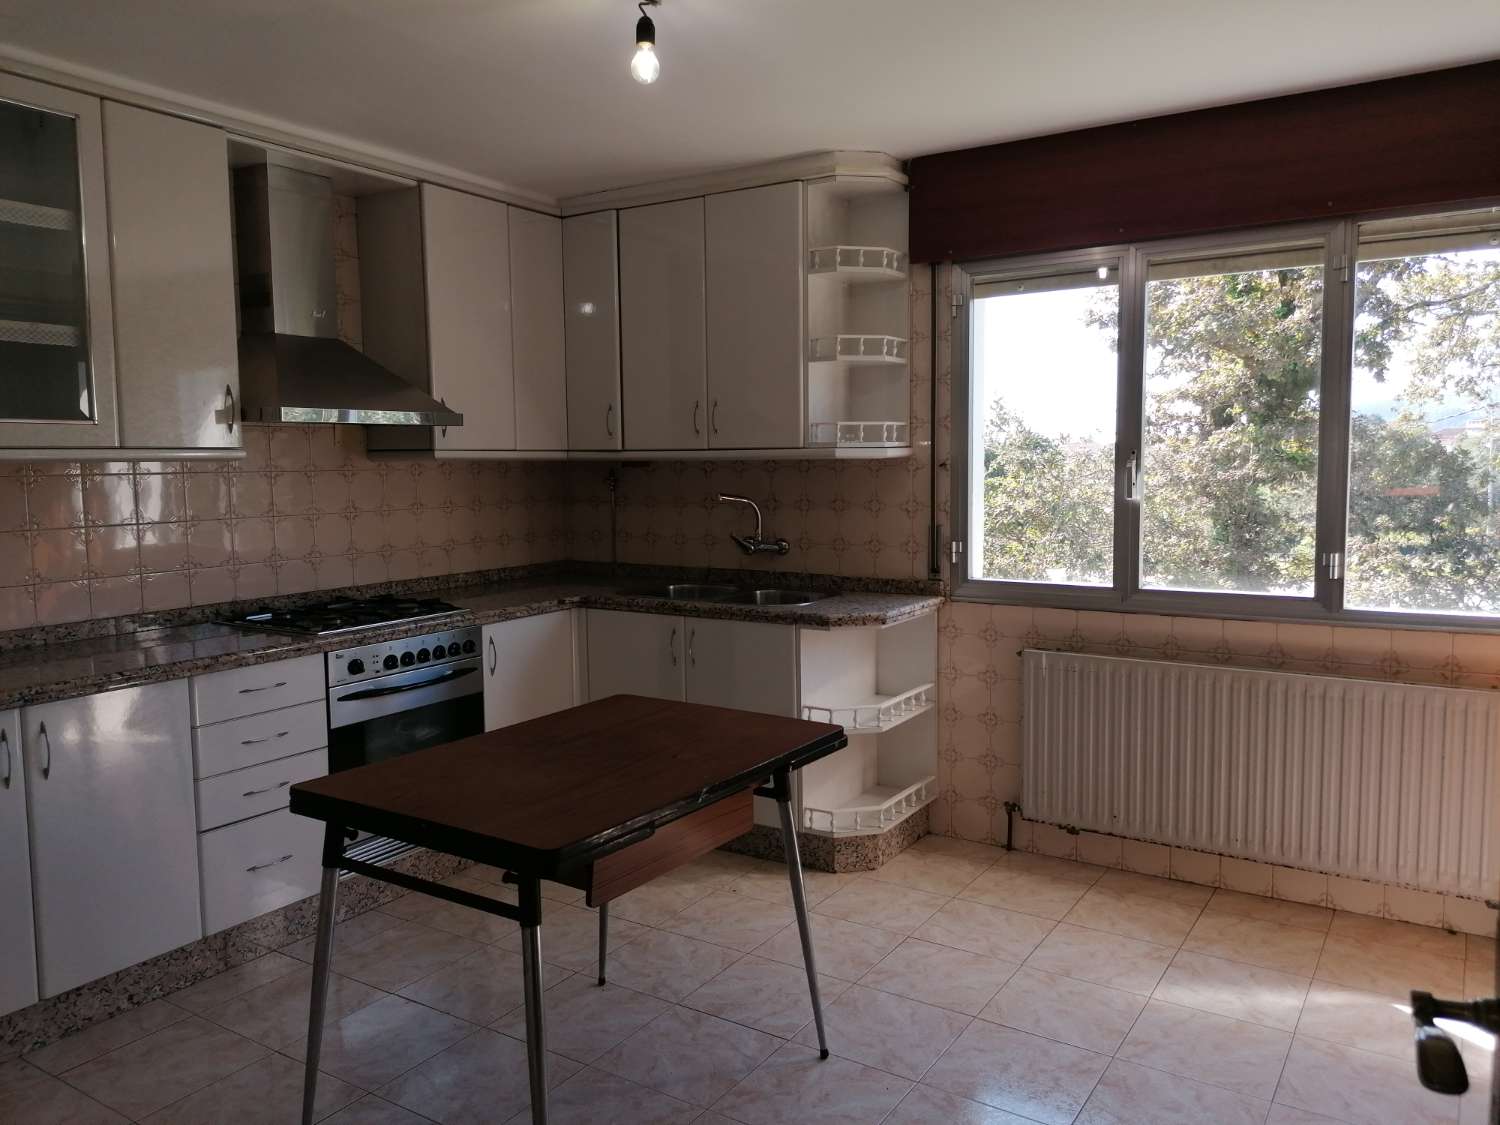 Pontevedra: A7134: Casa con finca in vendita a 4 km da Pontevedra...